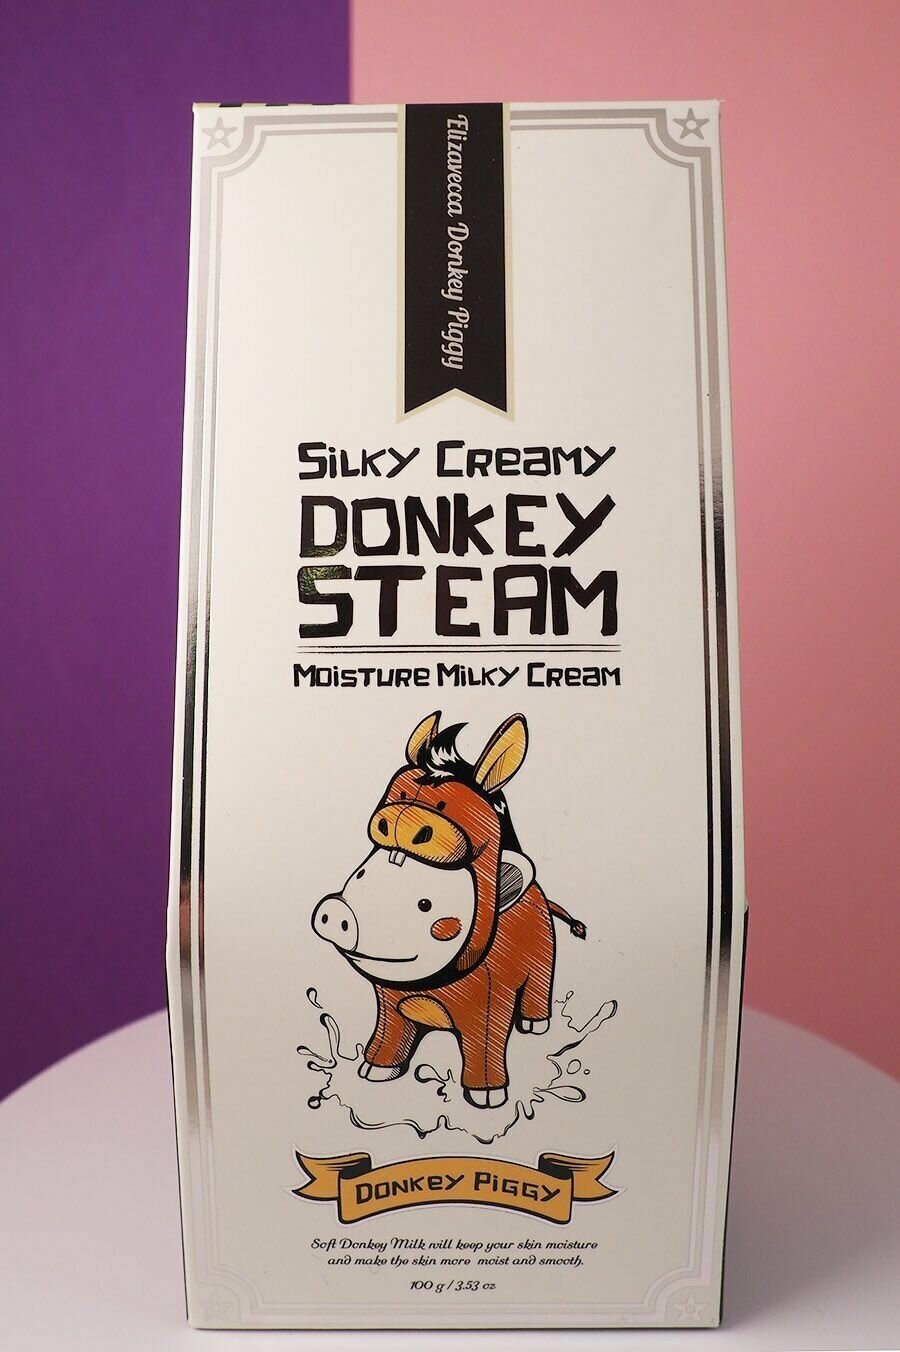 Silky cream donkey steam moisture milky cream фото 42